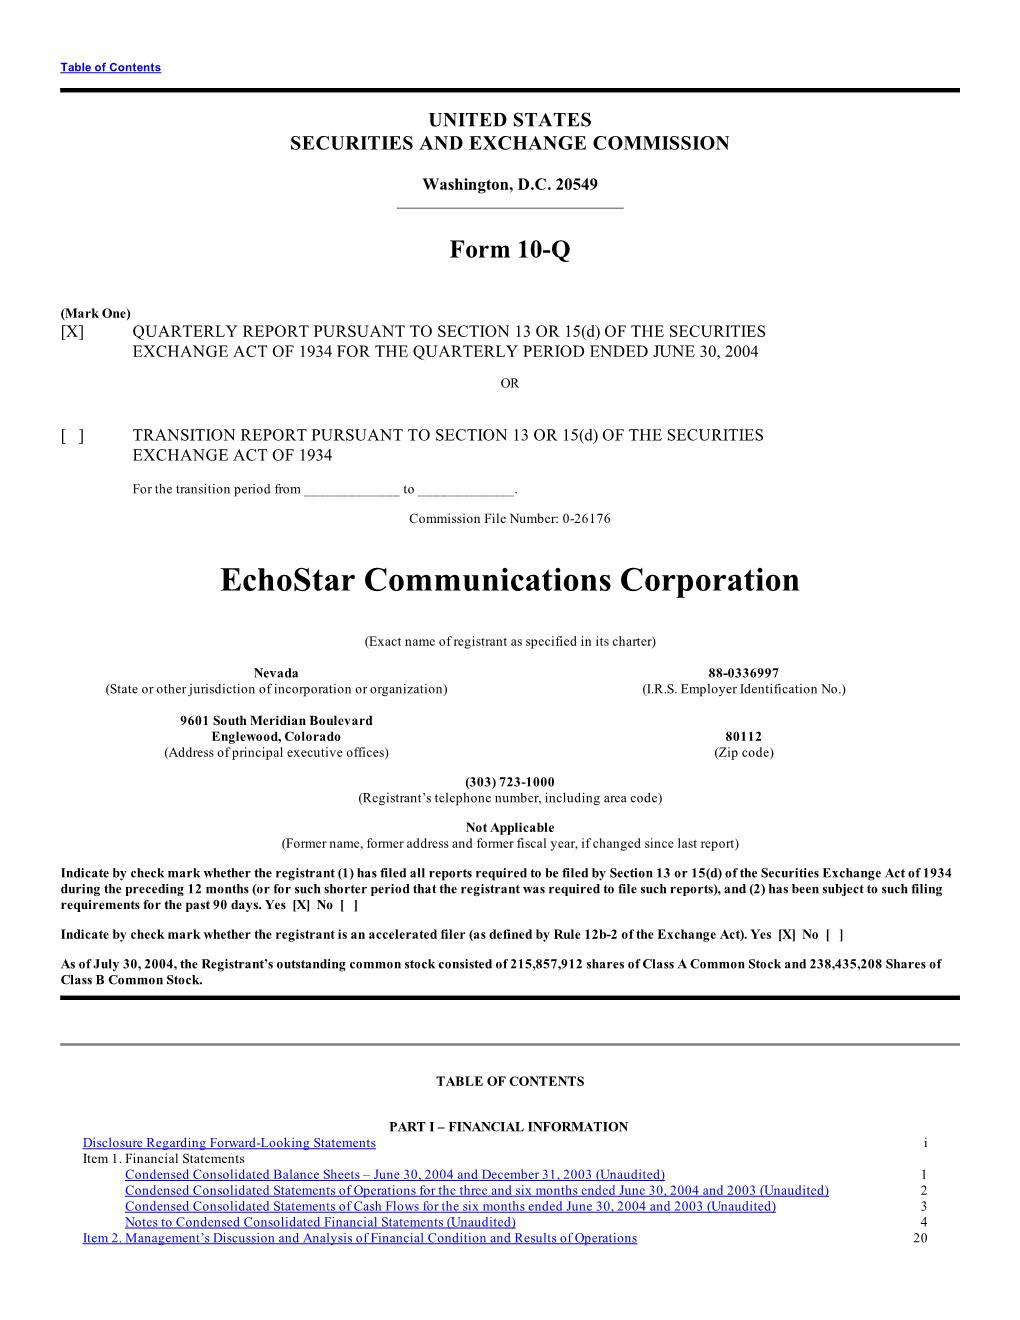 Echostar Communications Corporation